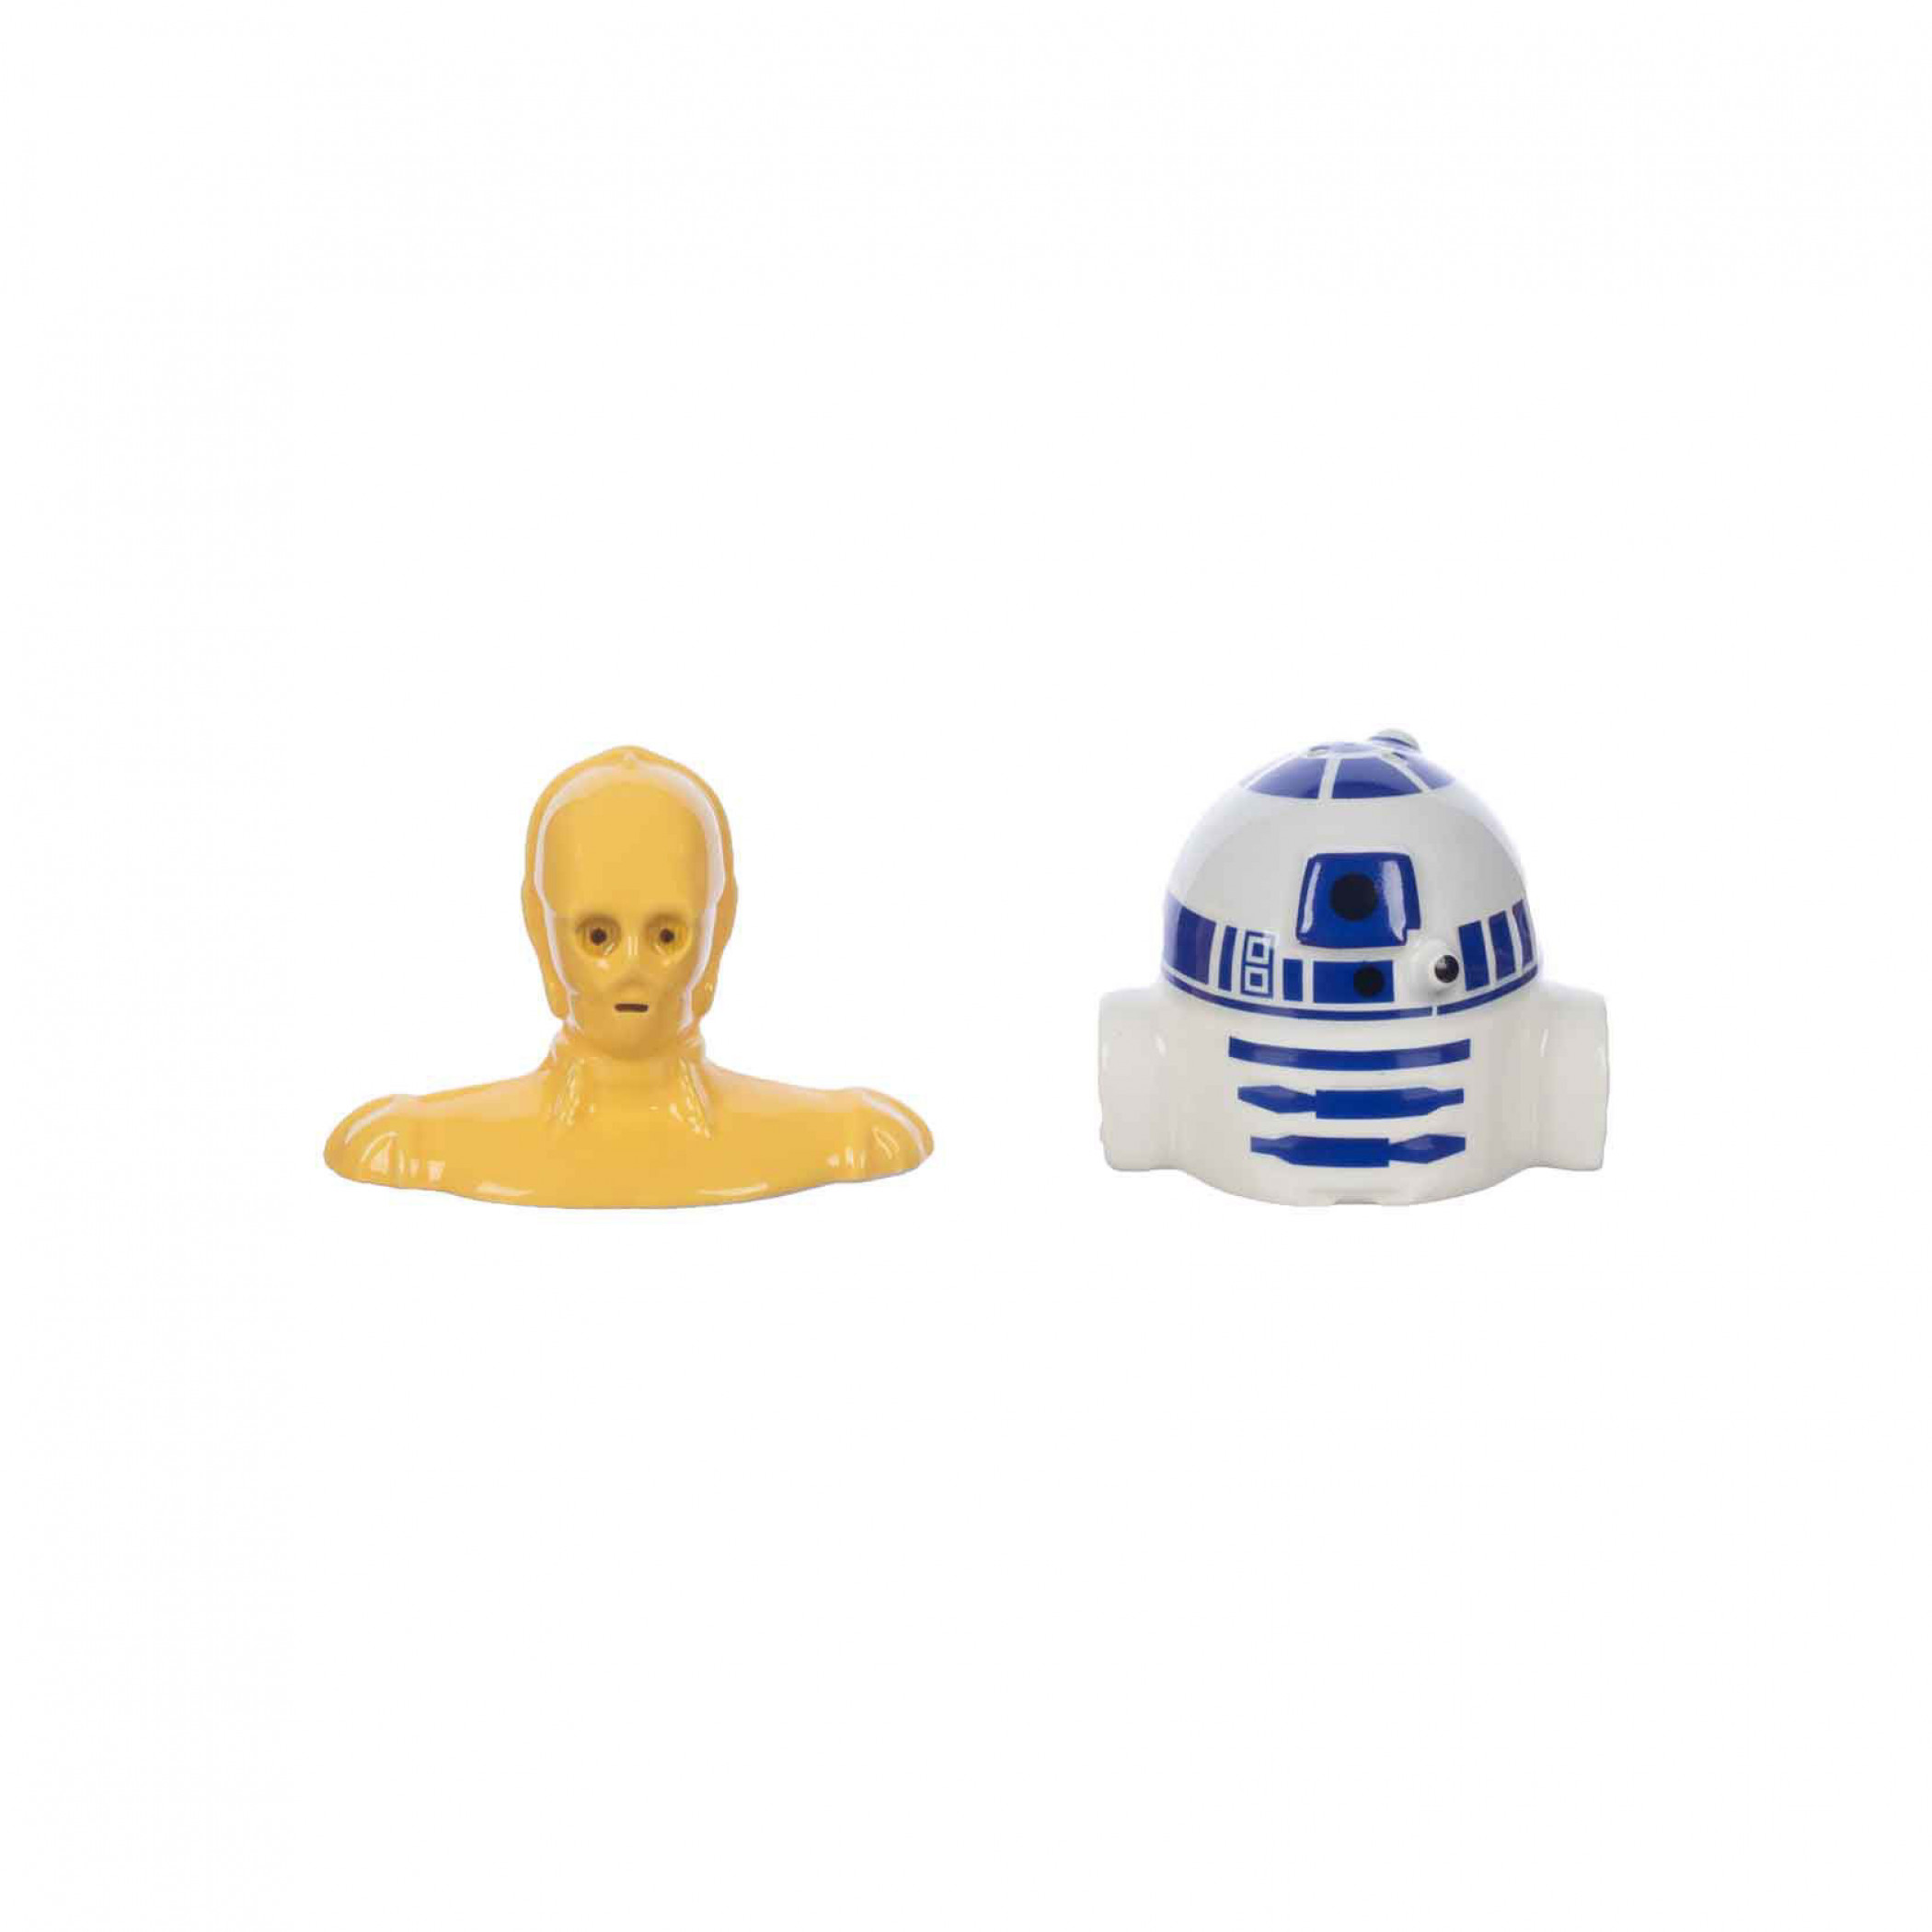 Star Wars R2-D2 & C-3PO Sculpted Ceramic Salt & Pepper Shaker Set